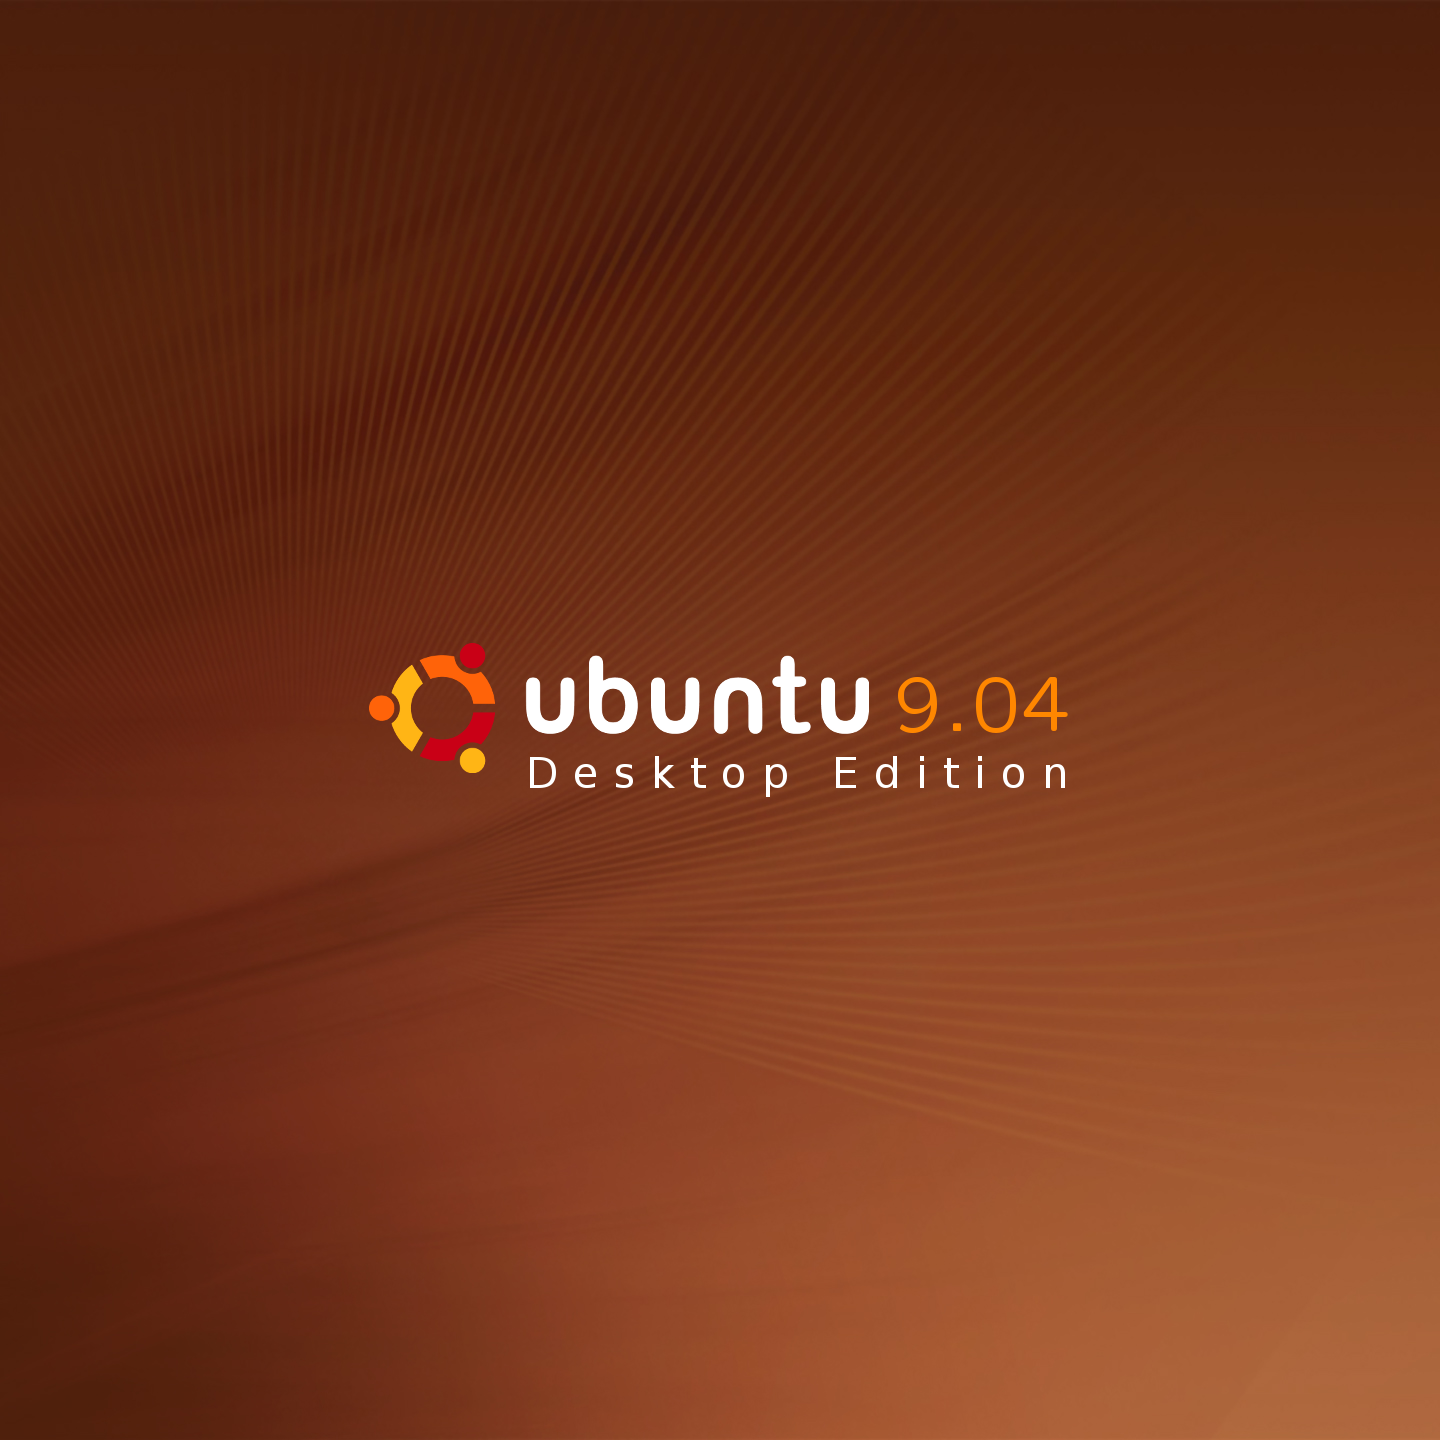 Url Wallzoa Techno Wallpaper Ubuntu Html